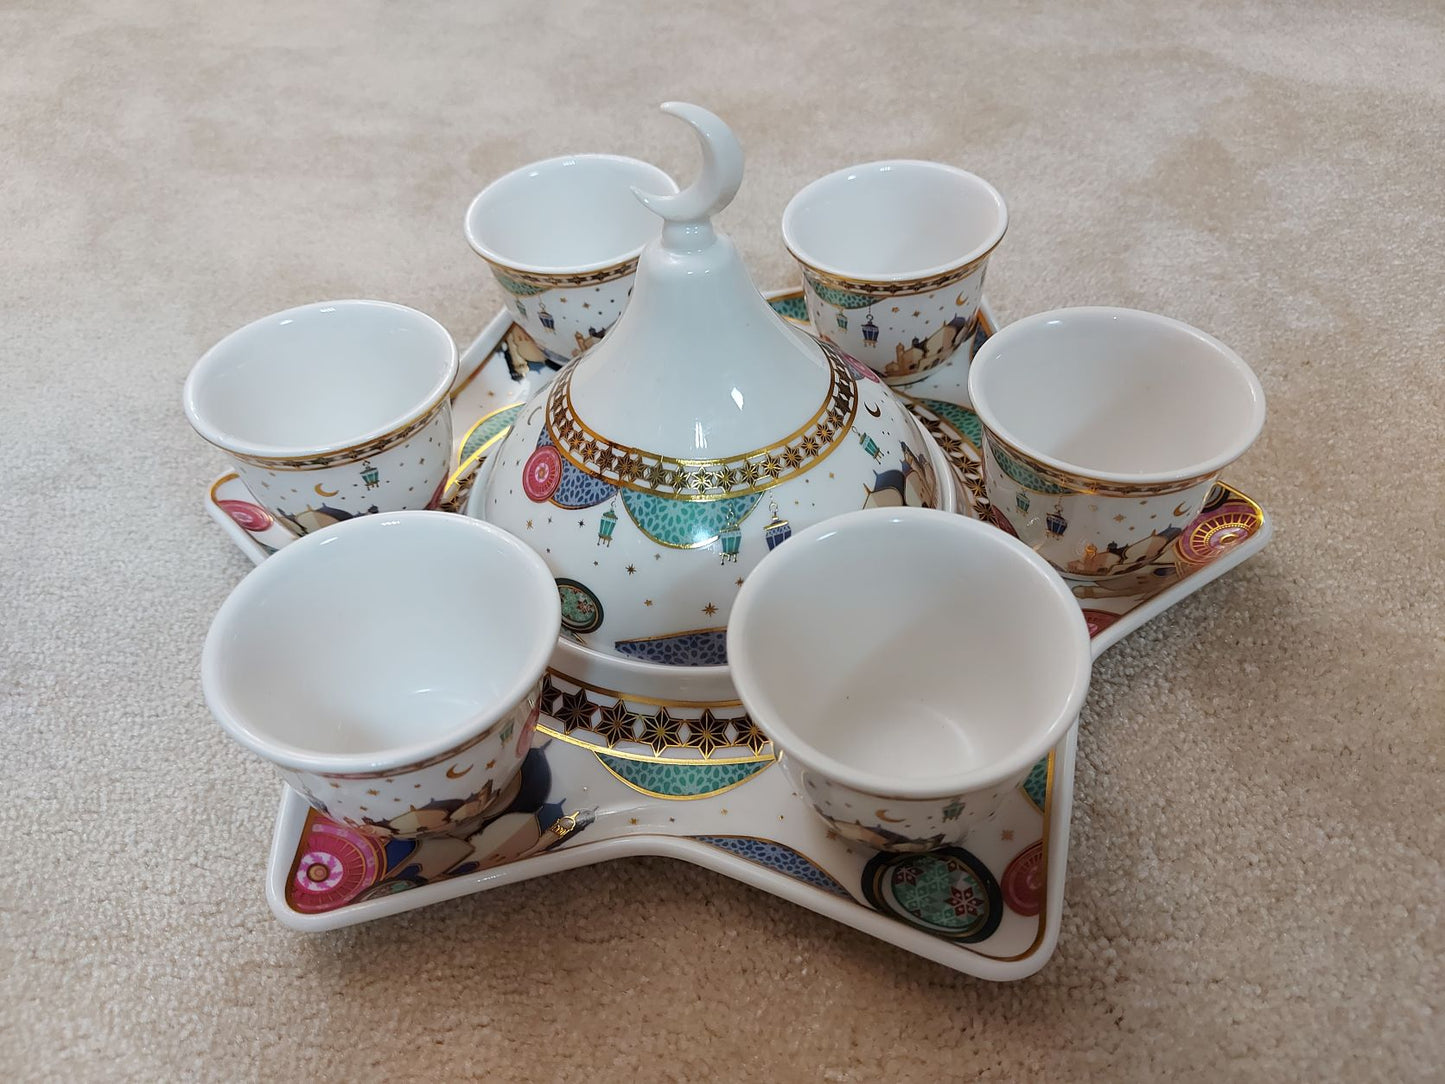 Arabic Ramadan Coffee-cup & Dates-plate set